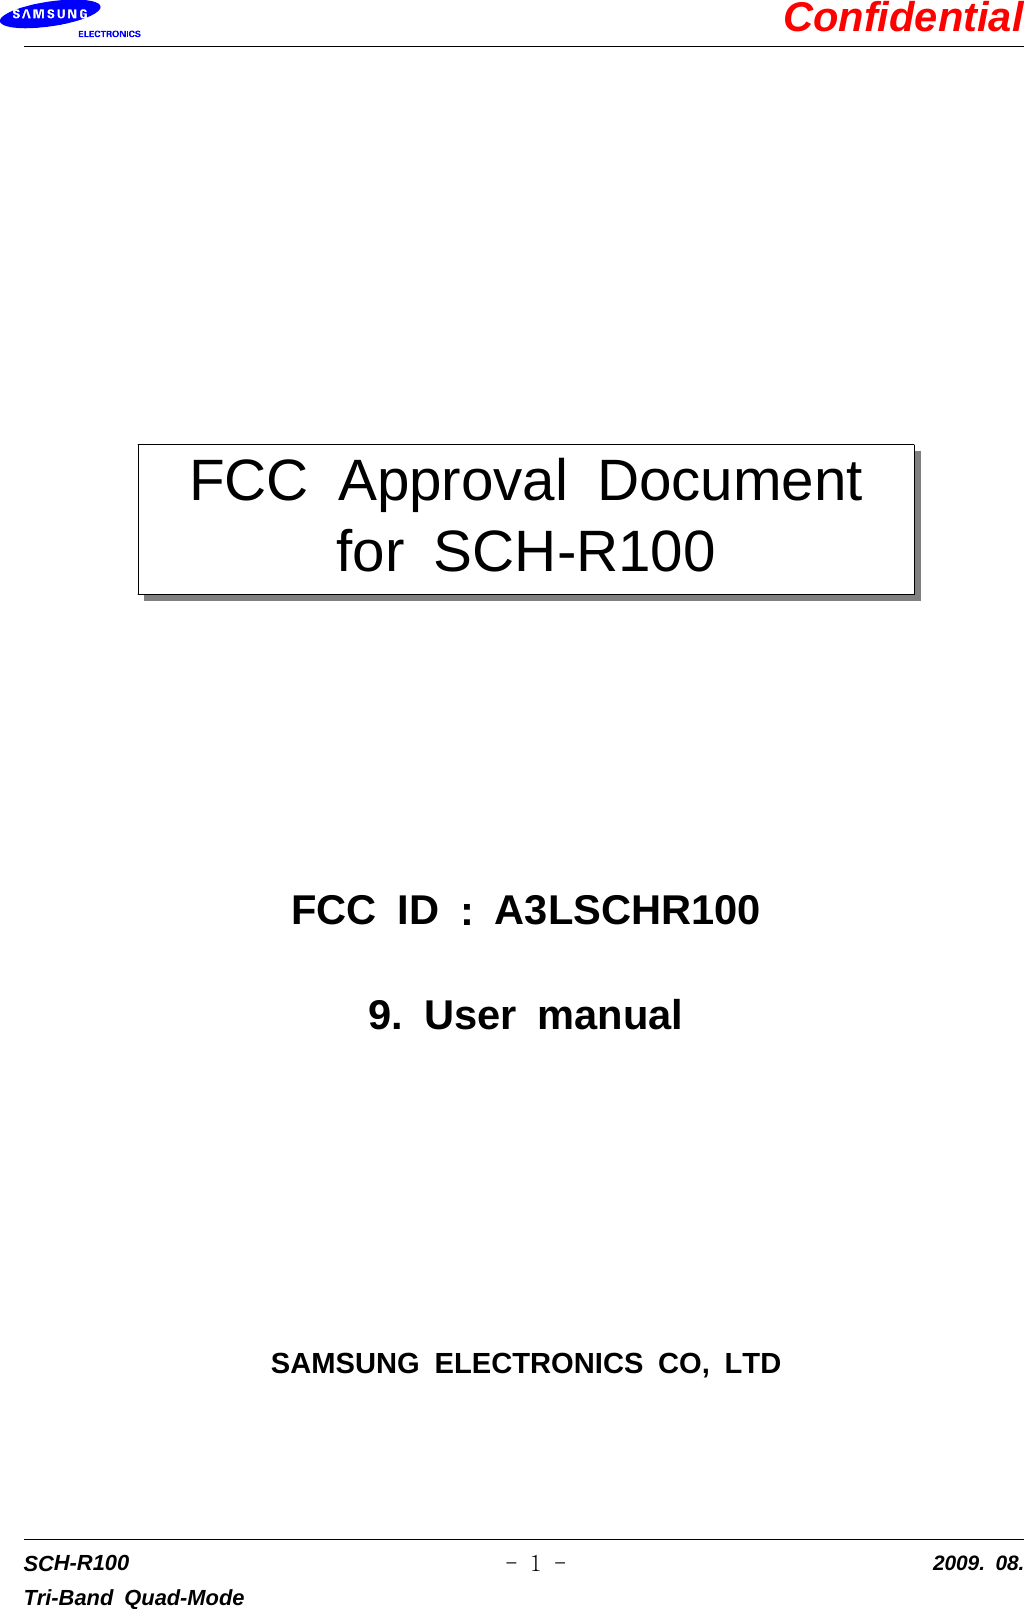 ConfidentialSCH-R100Tri-Band Quad-Mode2009. 08.-1-FCC Approval Documentfor SCH-R100FCC ID :A3LSCHR1009. User manualSAMSUNG ELECTRONICS CO, LTD